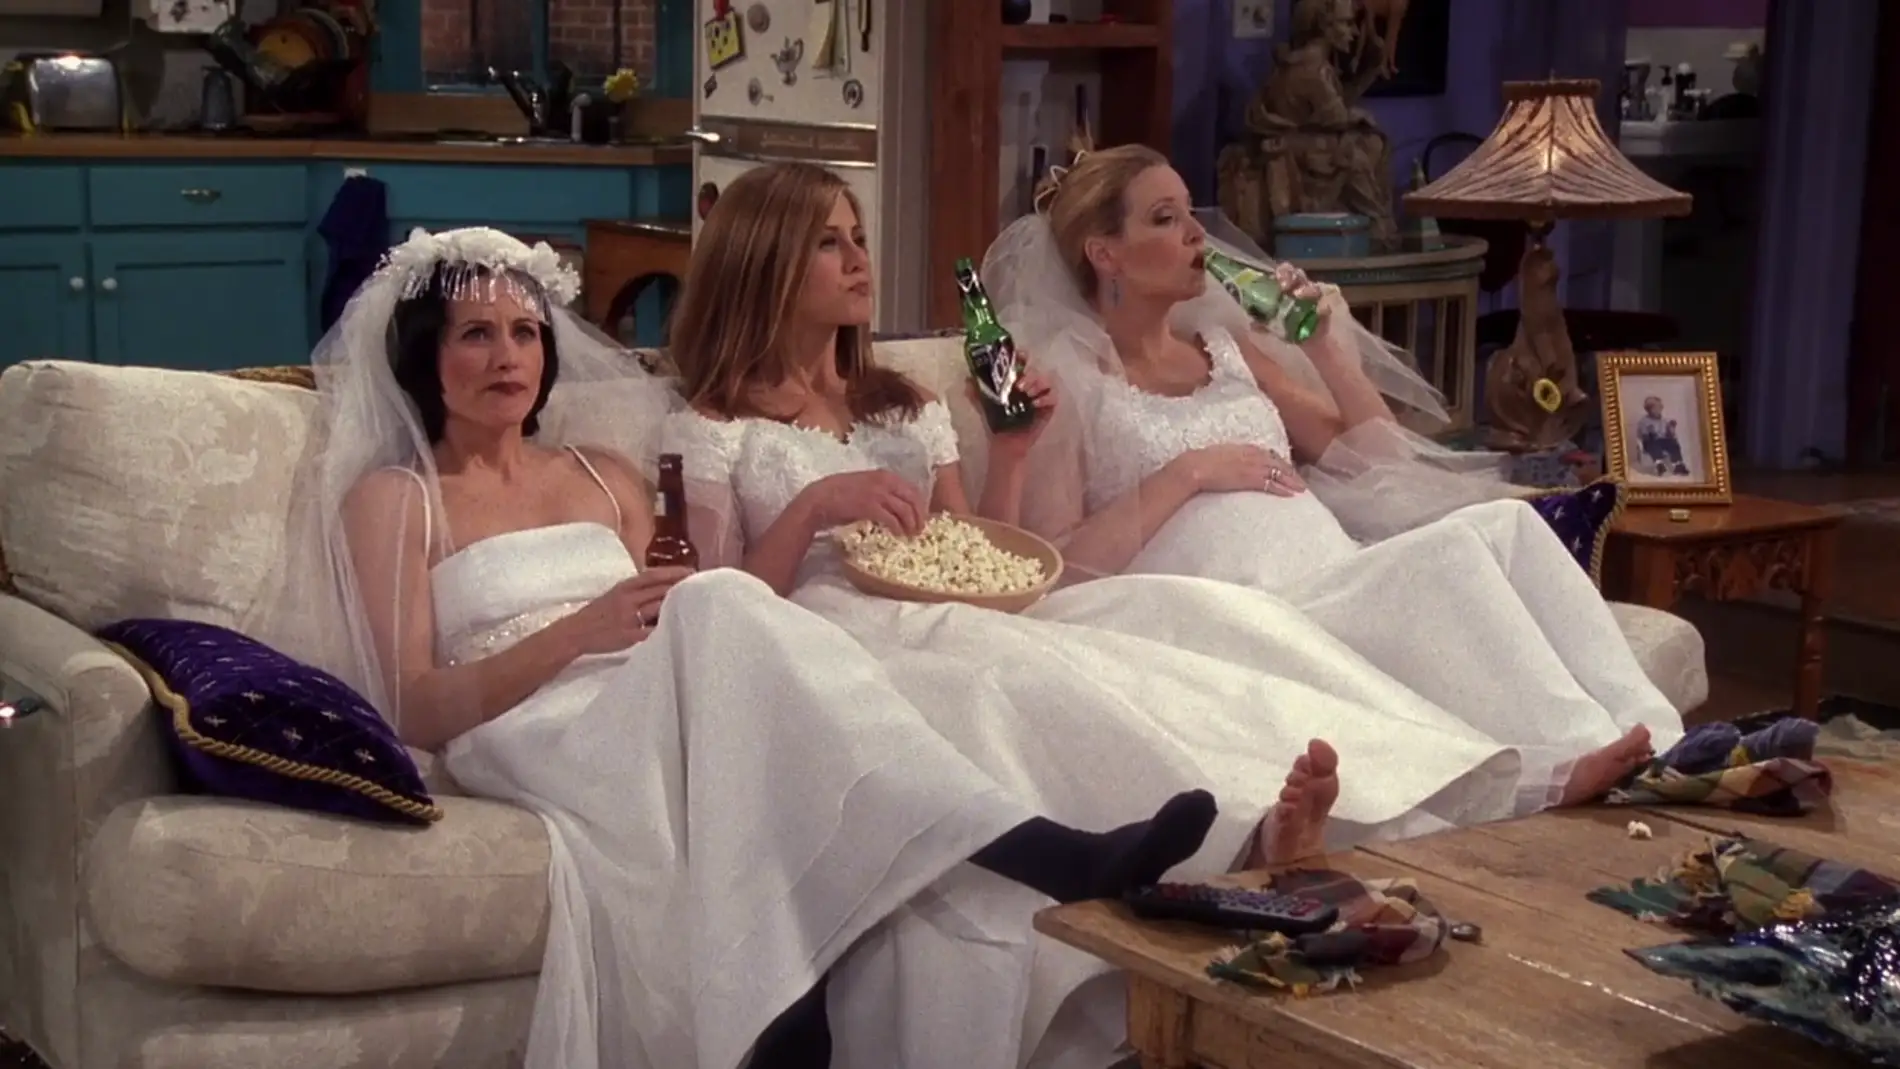 Monica, Rachel y Phoebe en 'Friends'